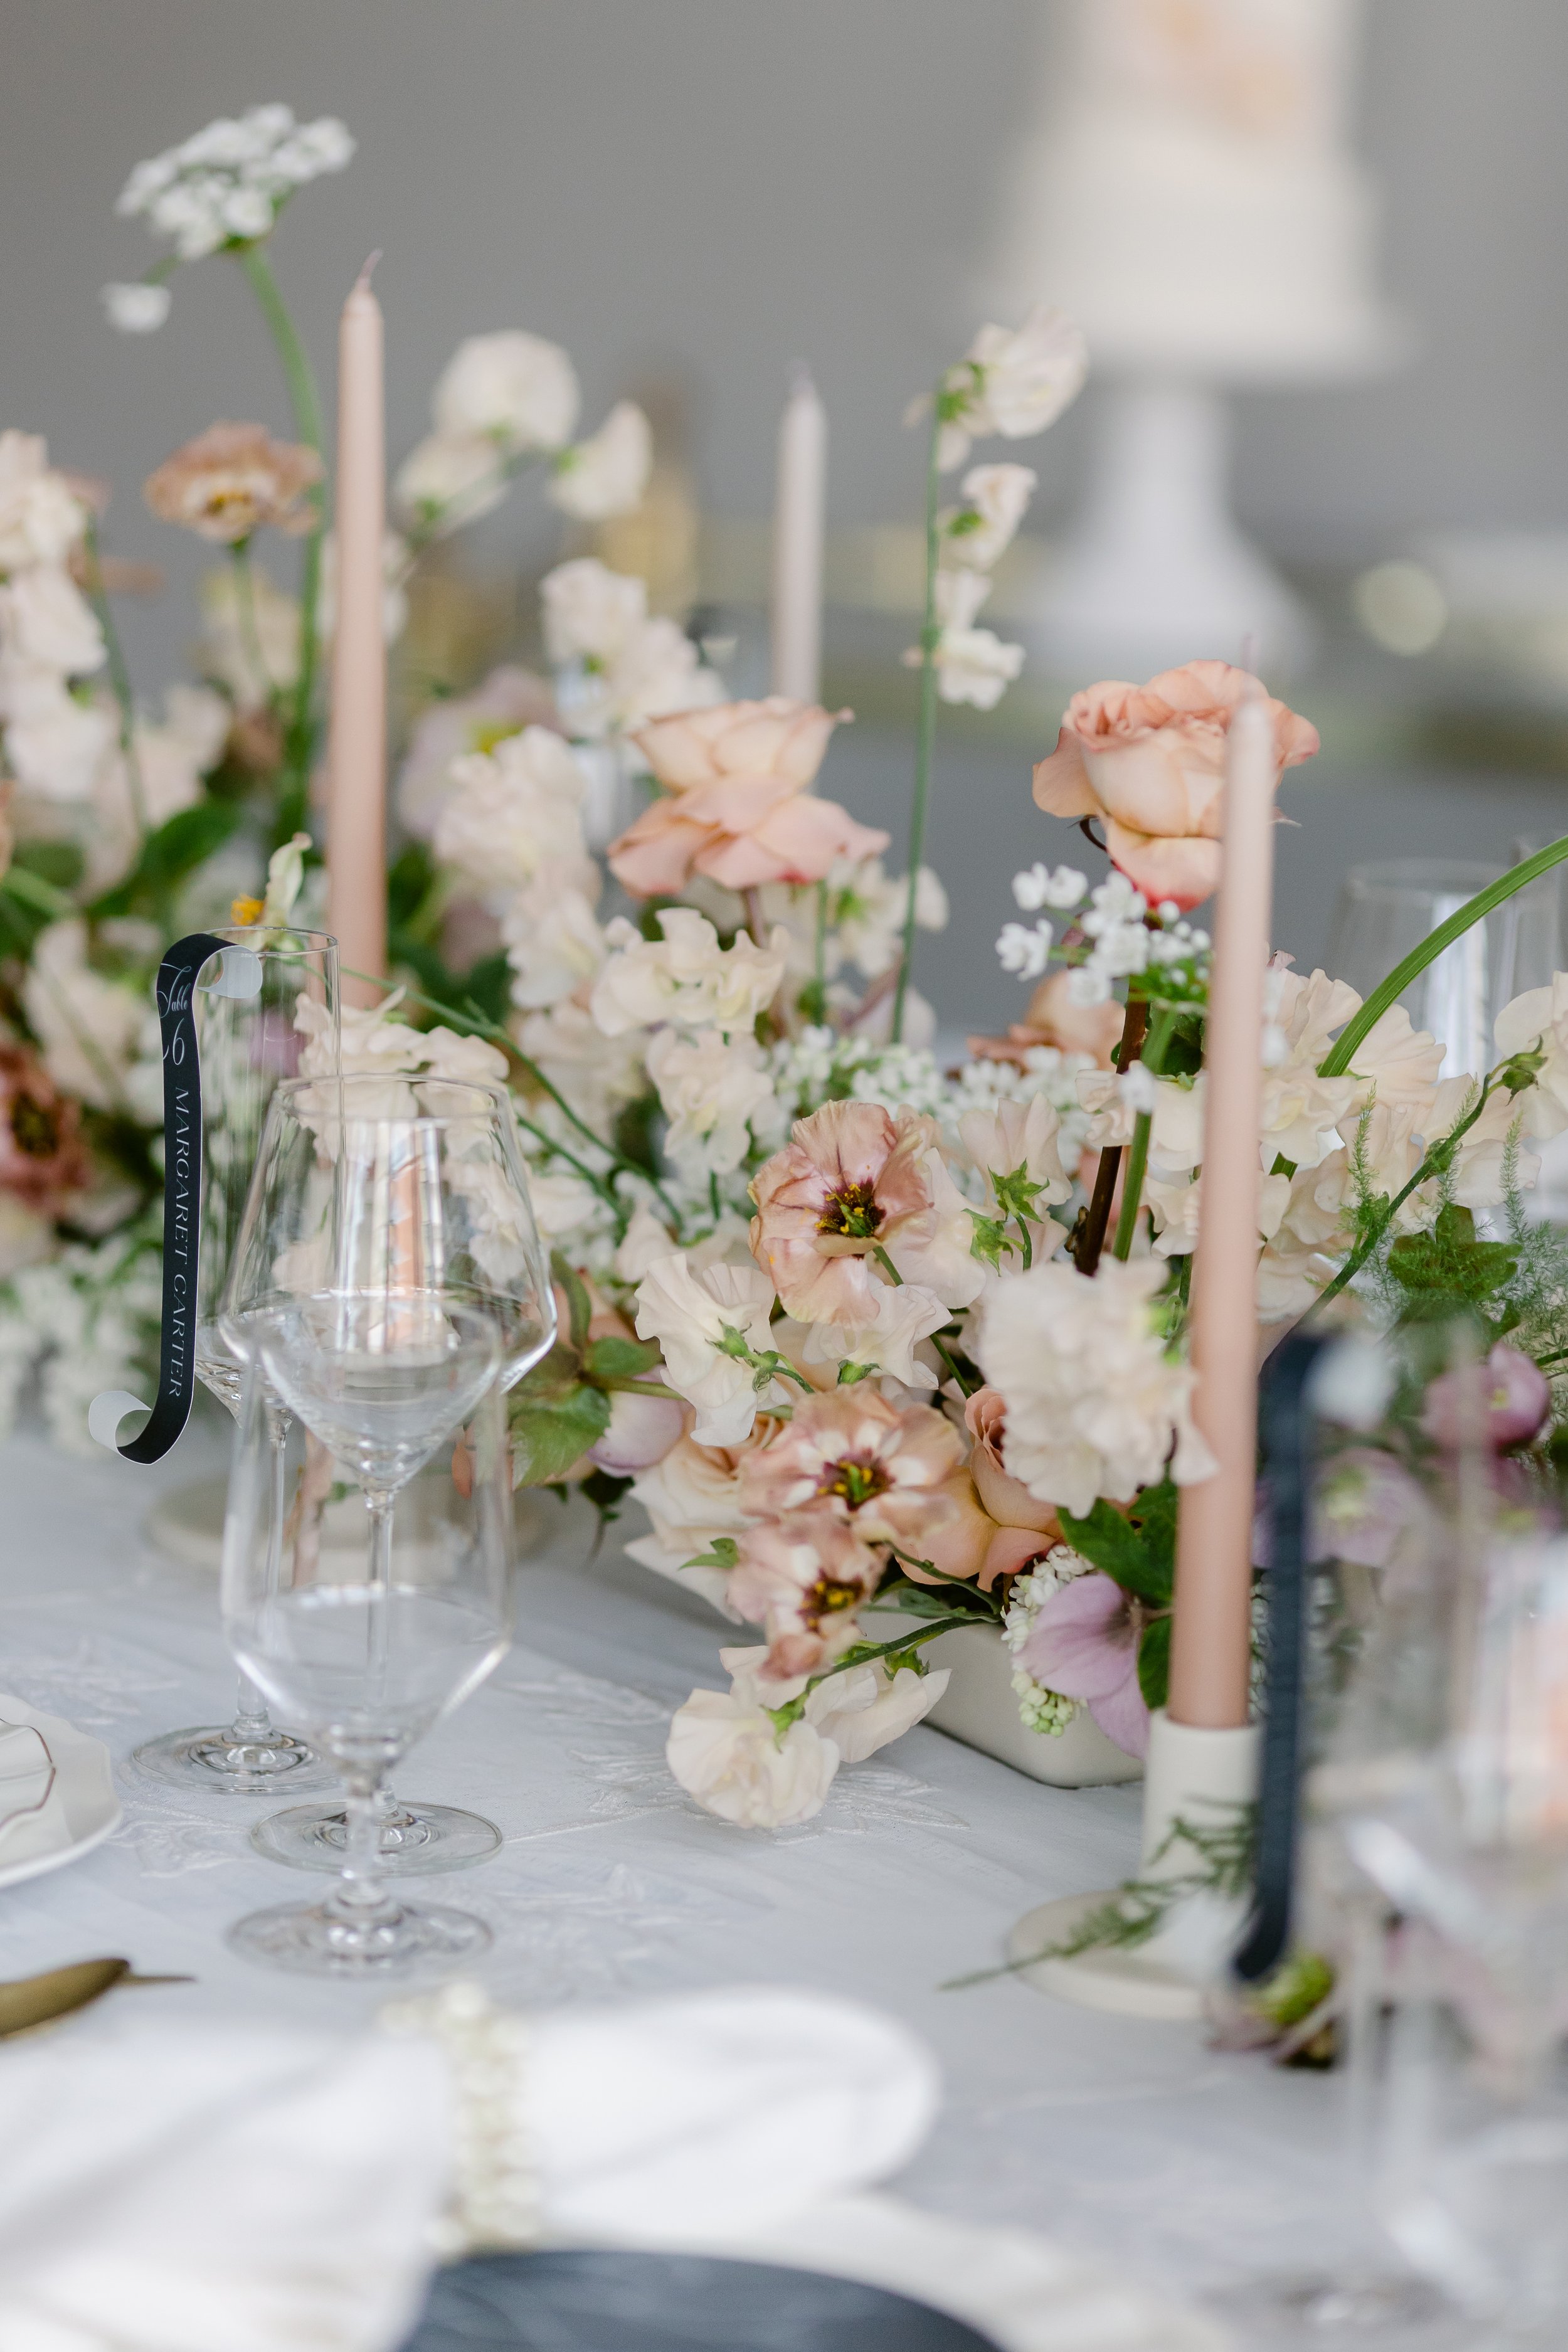 Wedding reception with spring florals